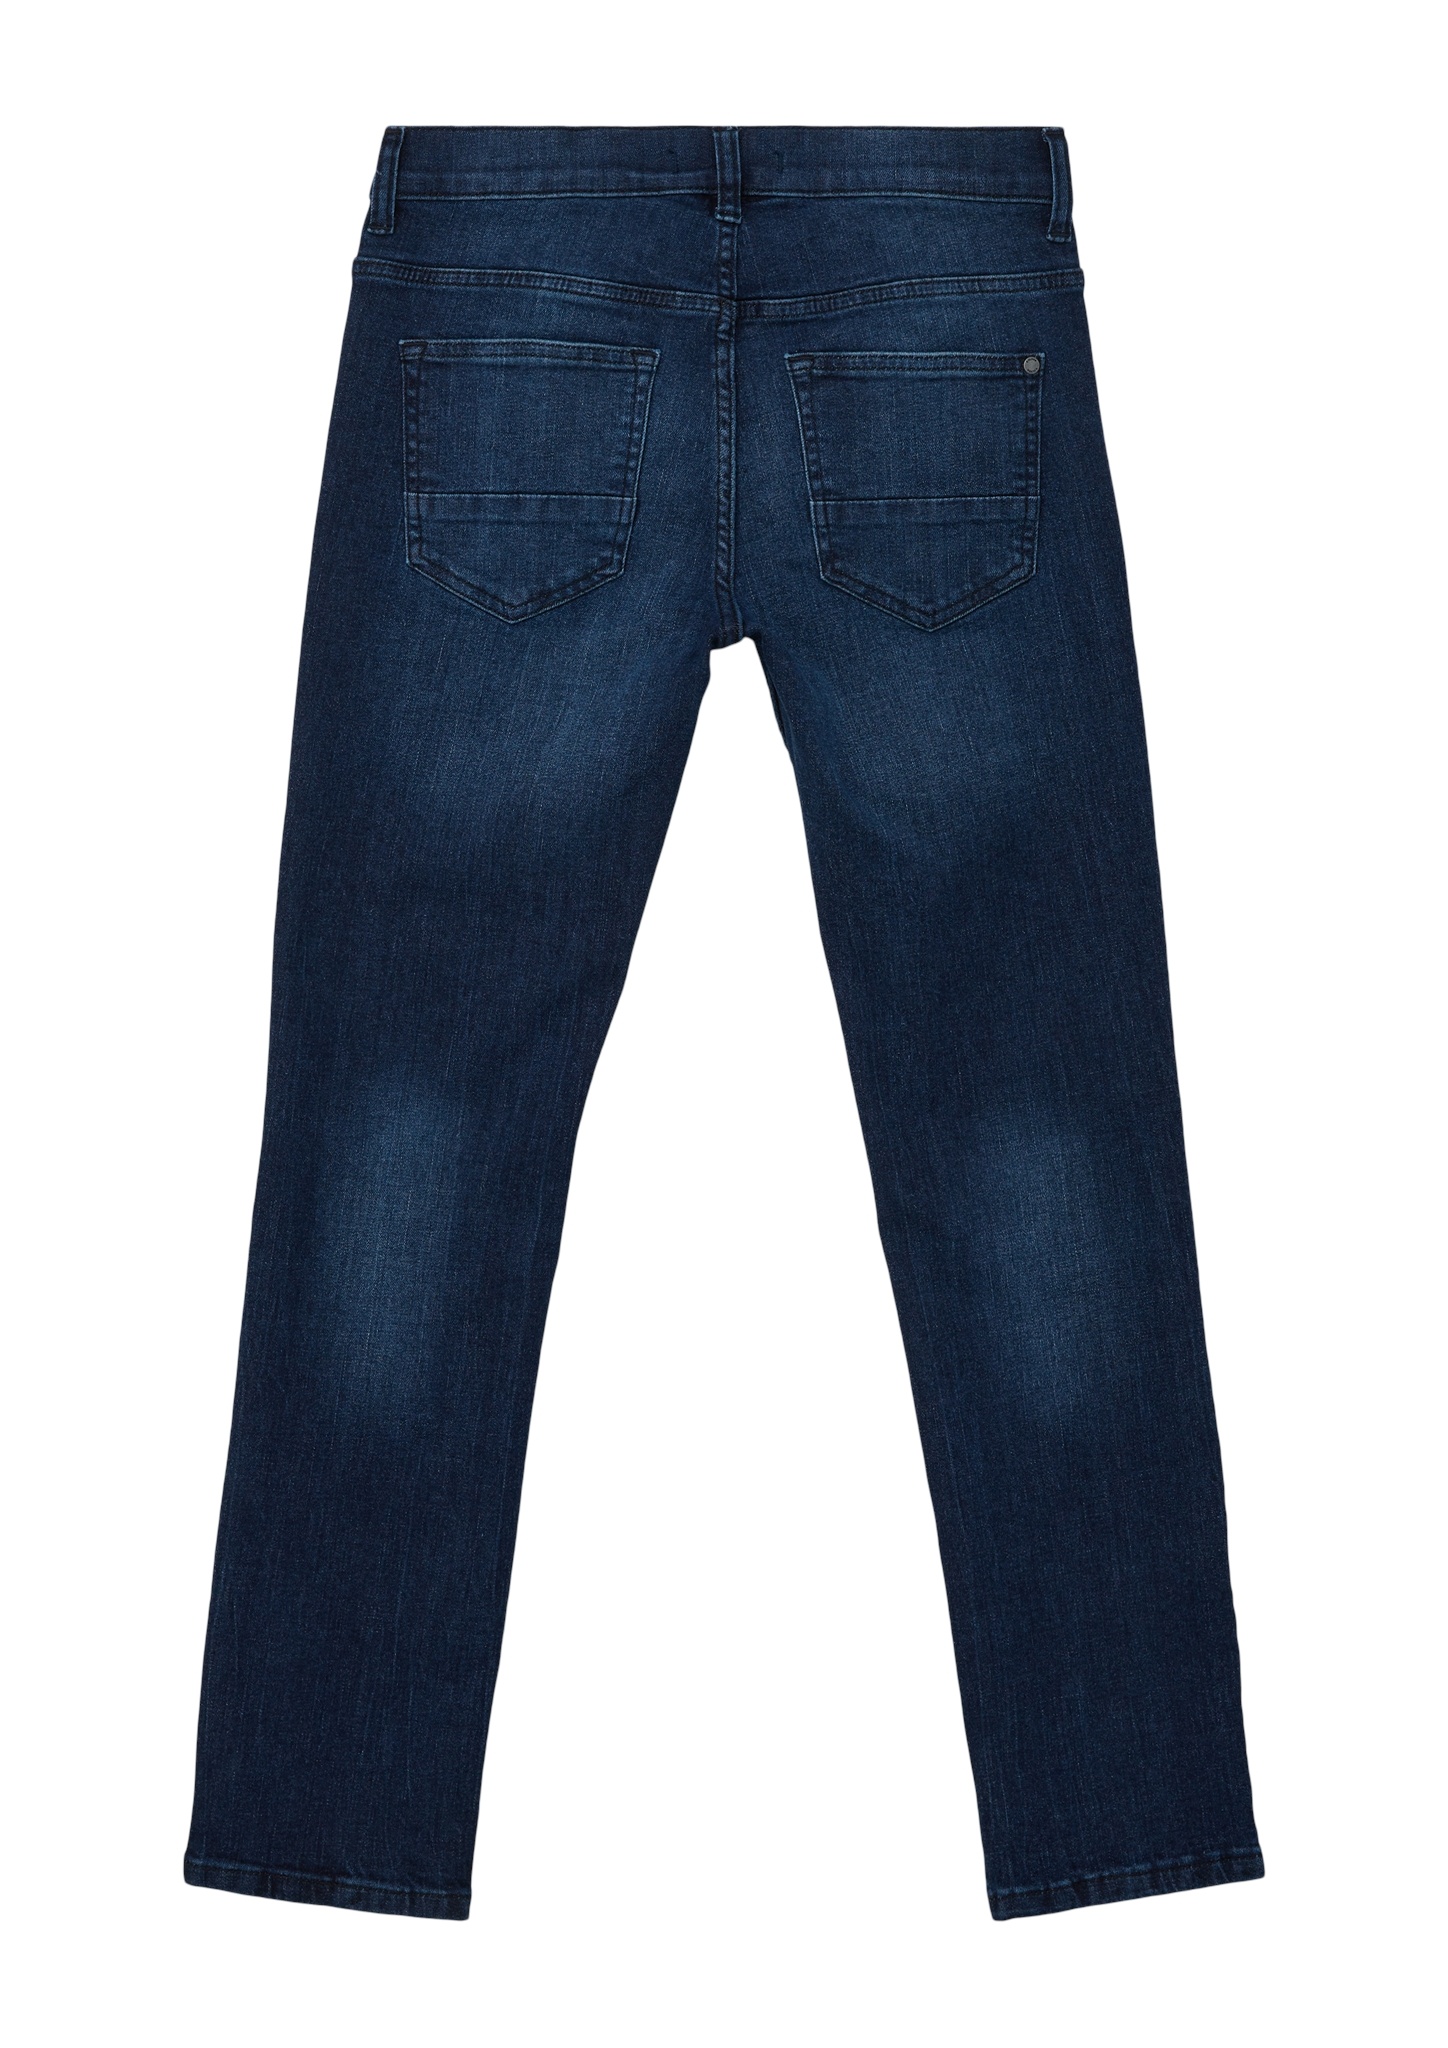 S.OLIVER Jeans 10745930